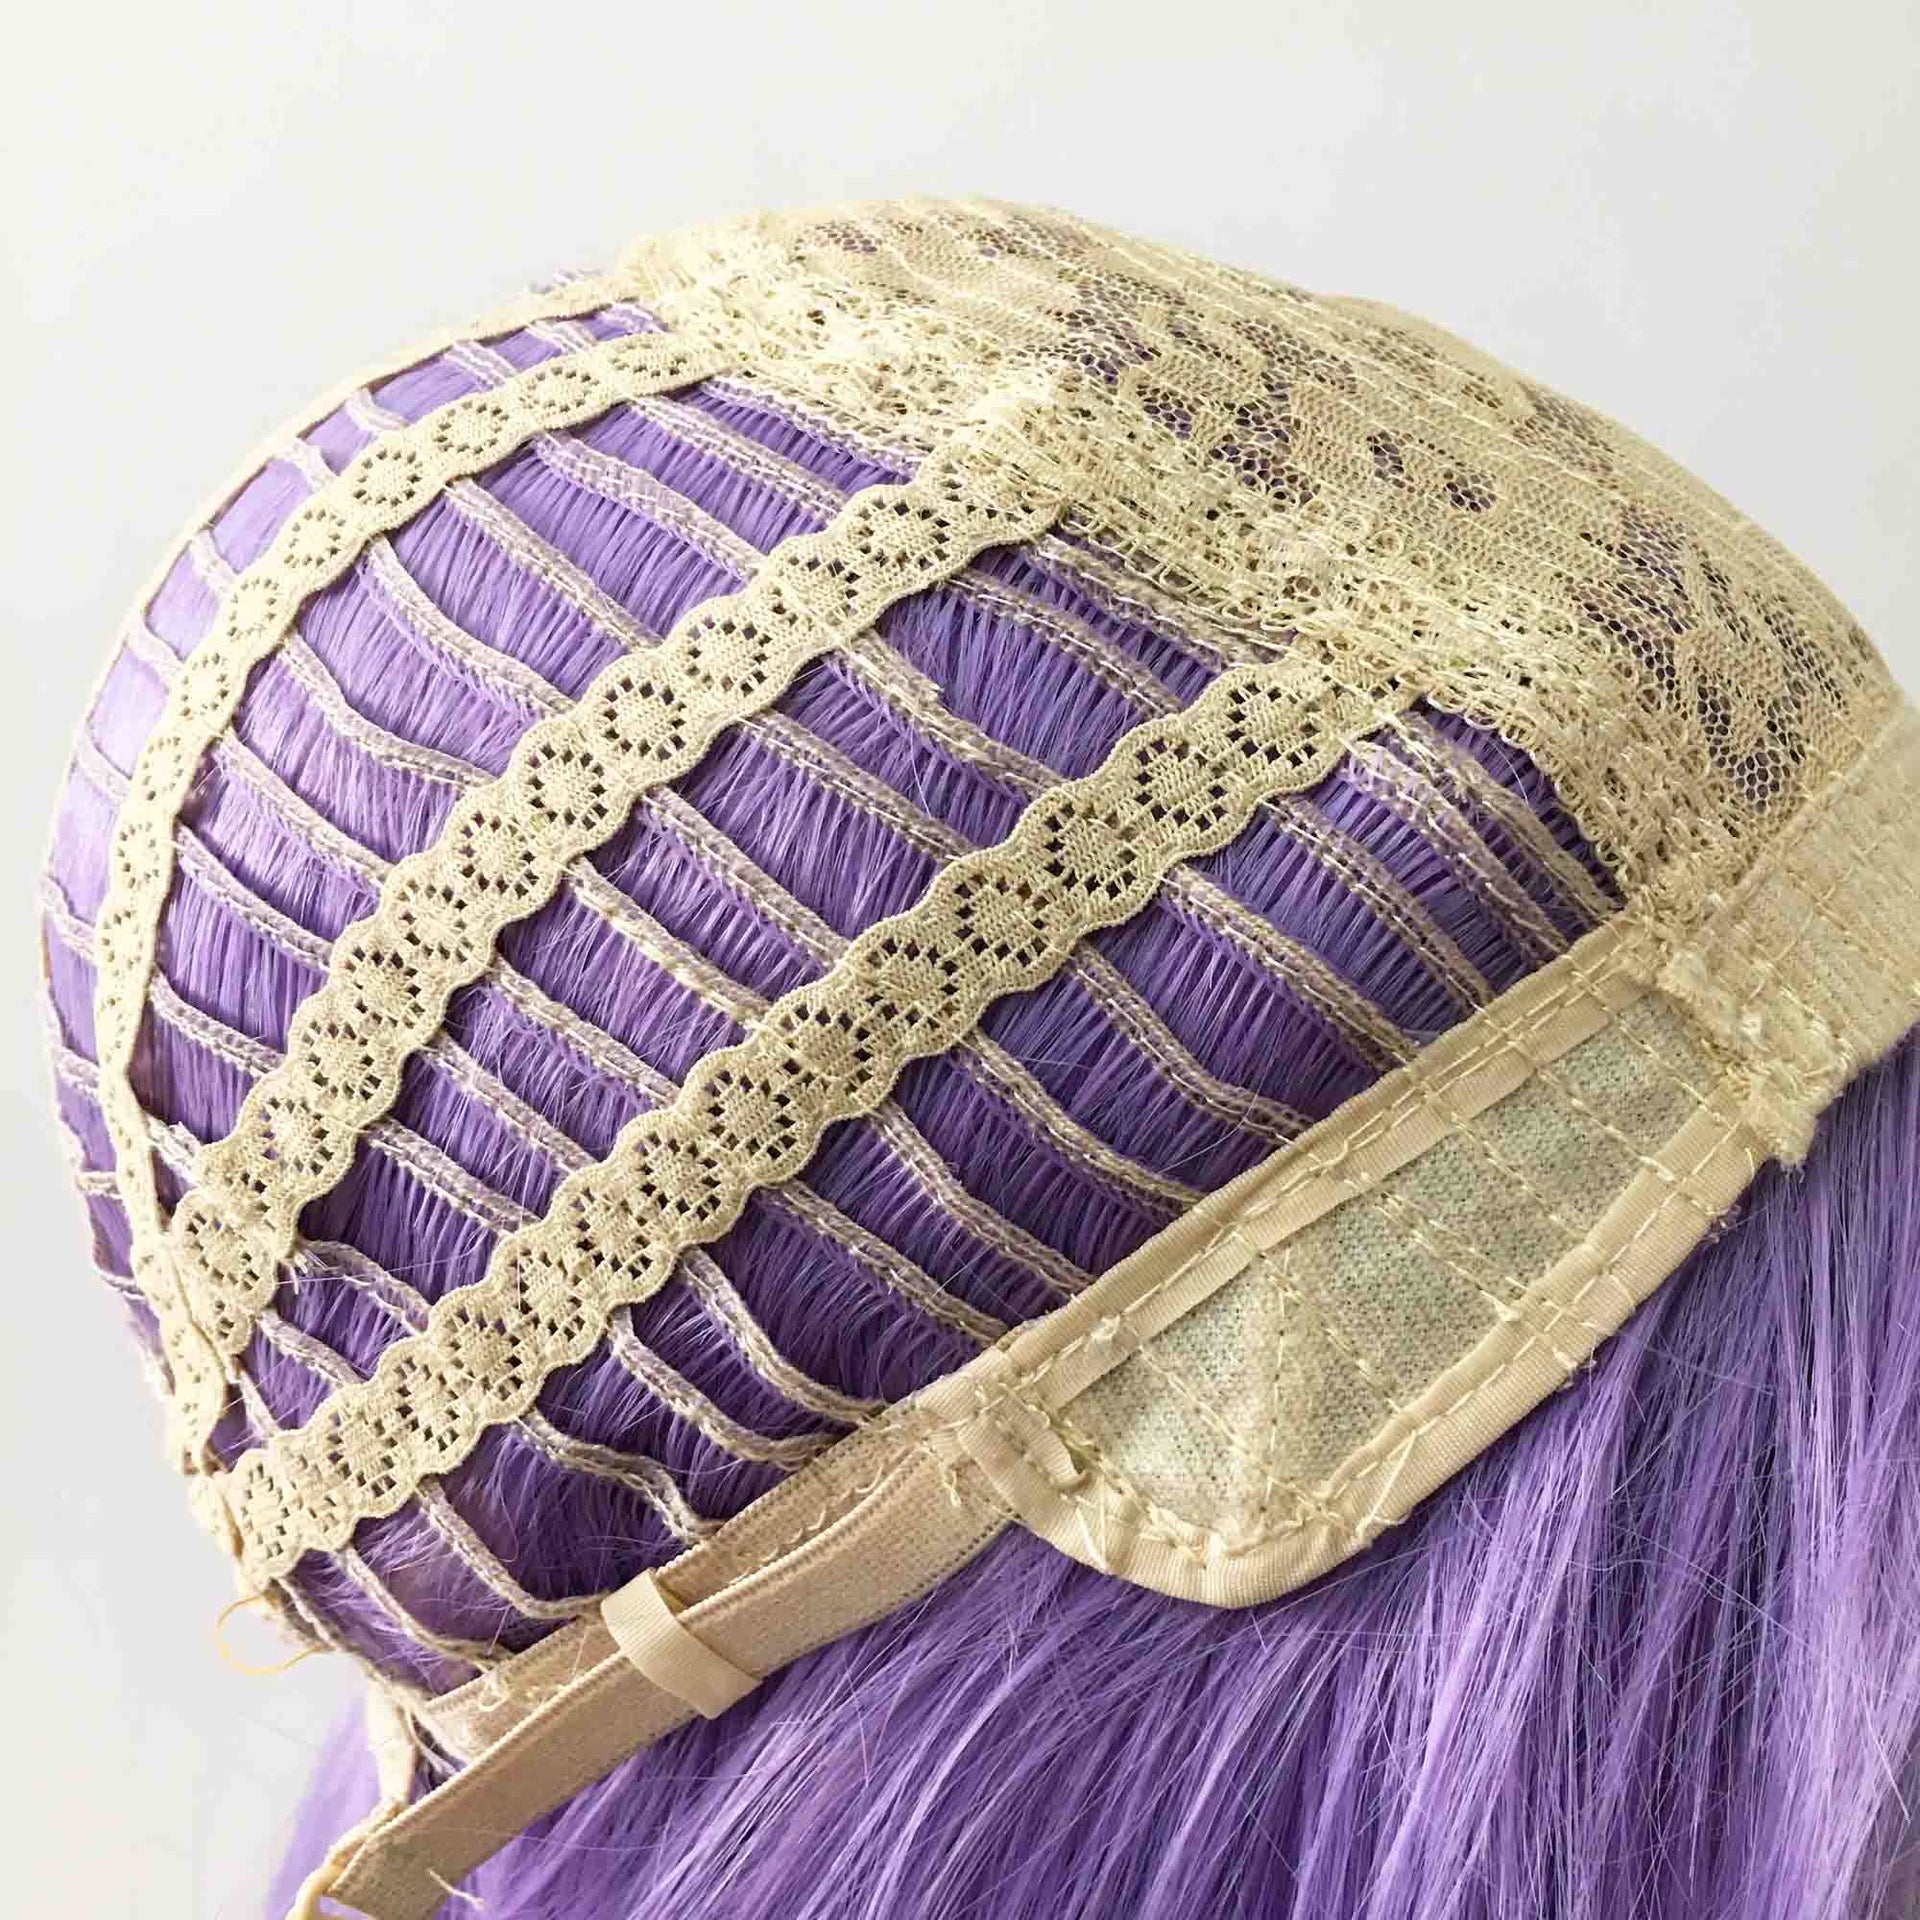 nevermindyrhead Women Lavender Purple Thick Bangs Long Straight Blunt Cut Wig